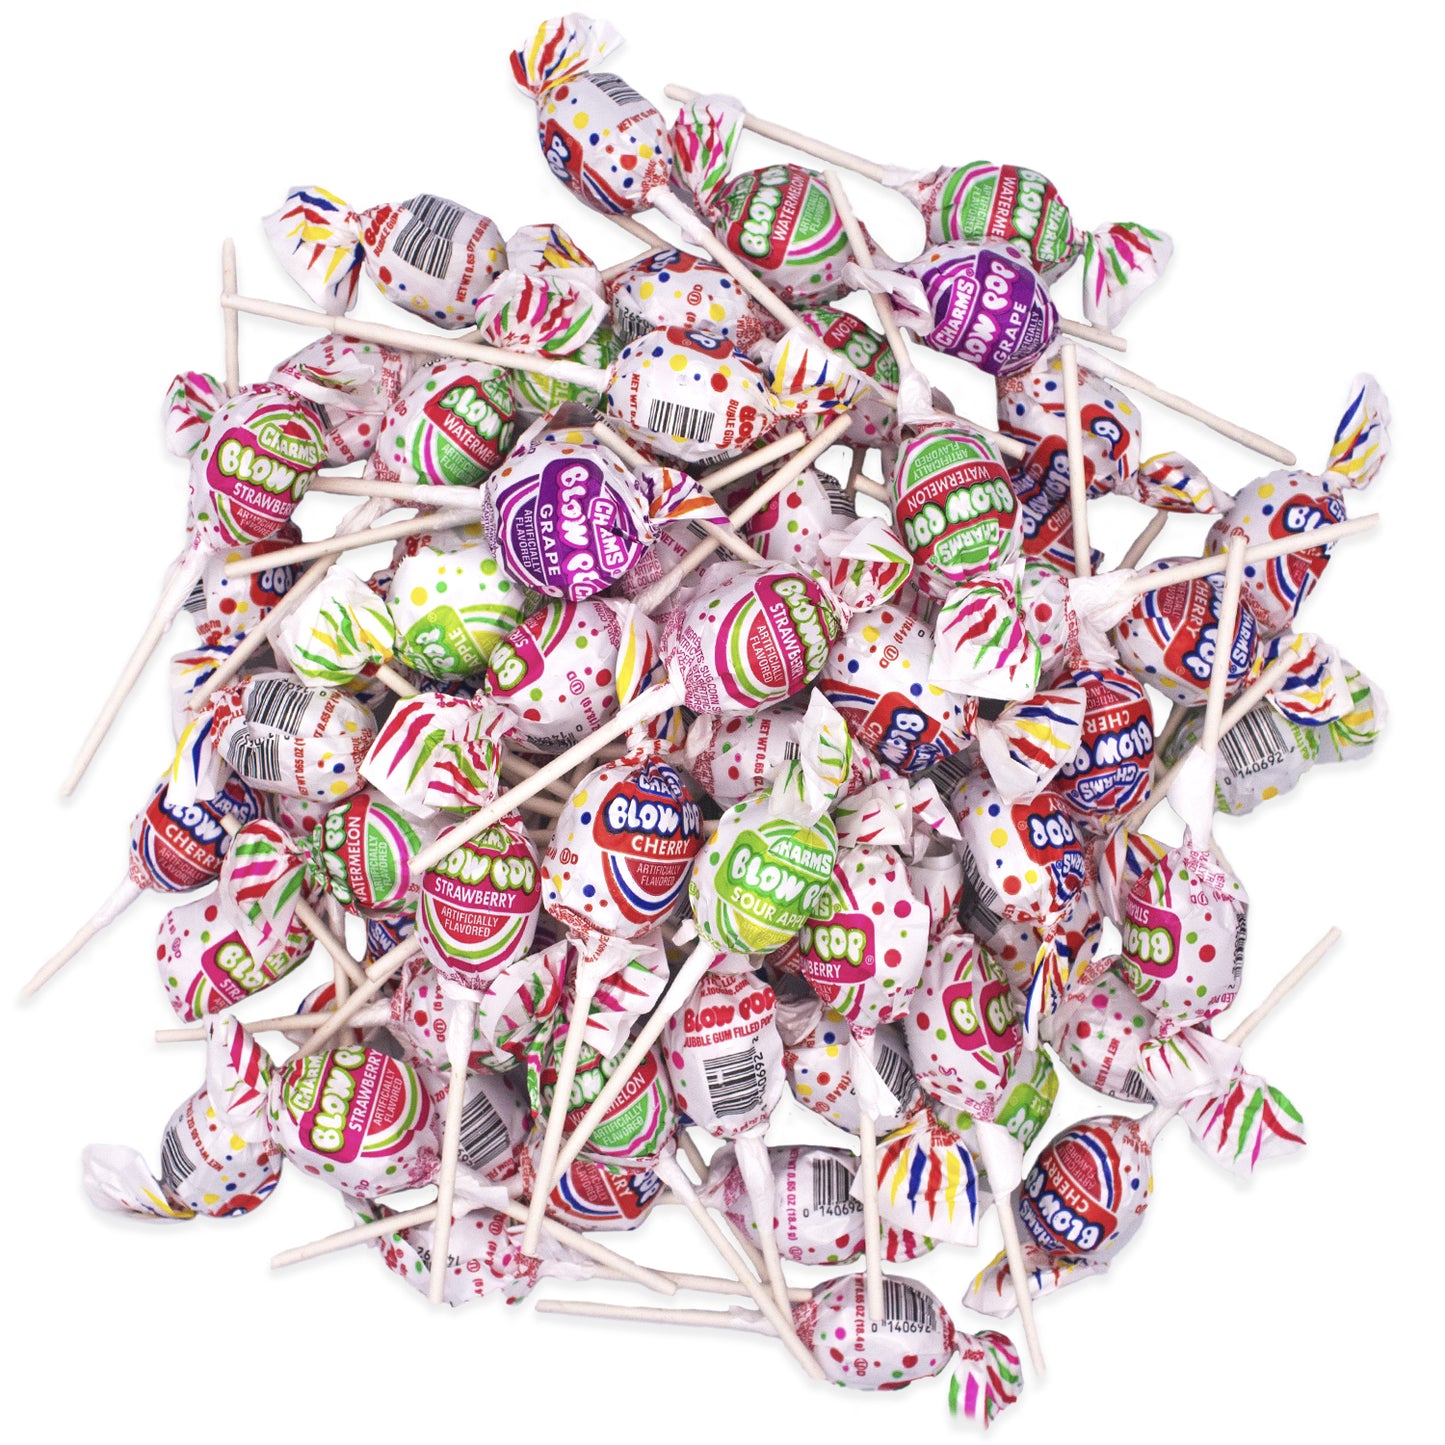 Assorted Charms Blow Pops, Original Size Lollipops - 2 lbs